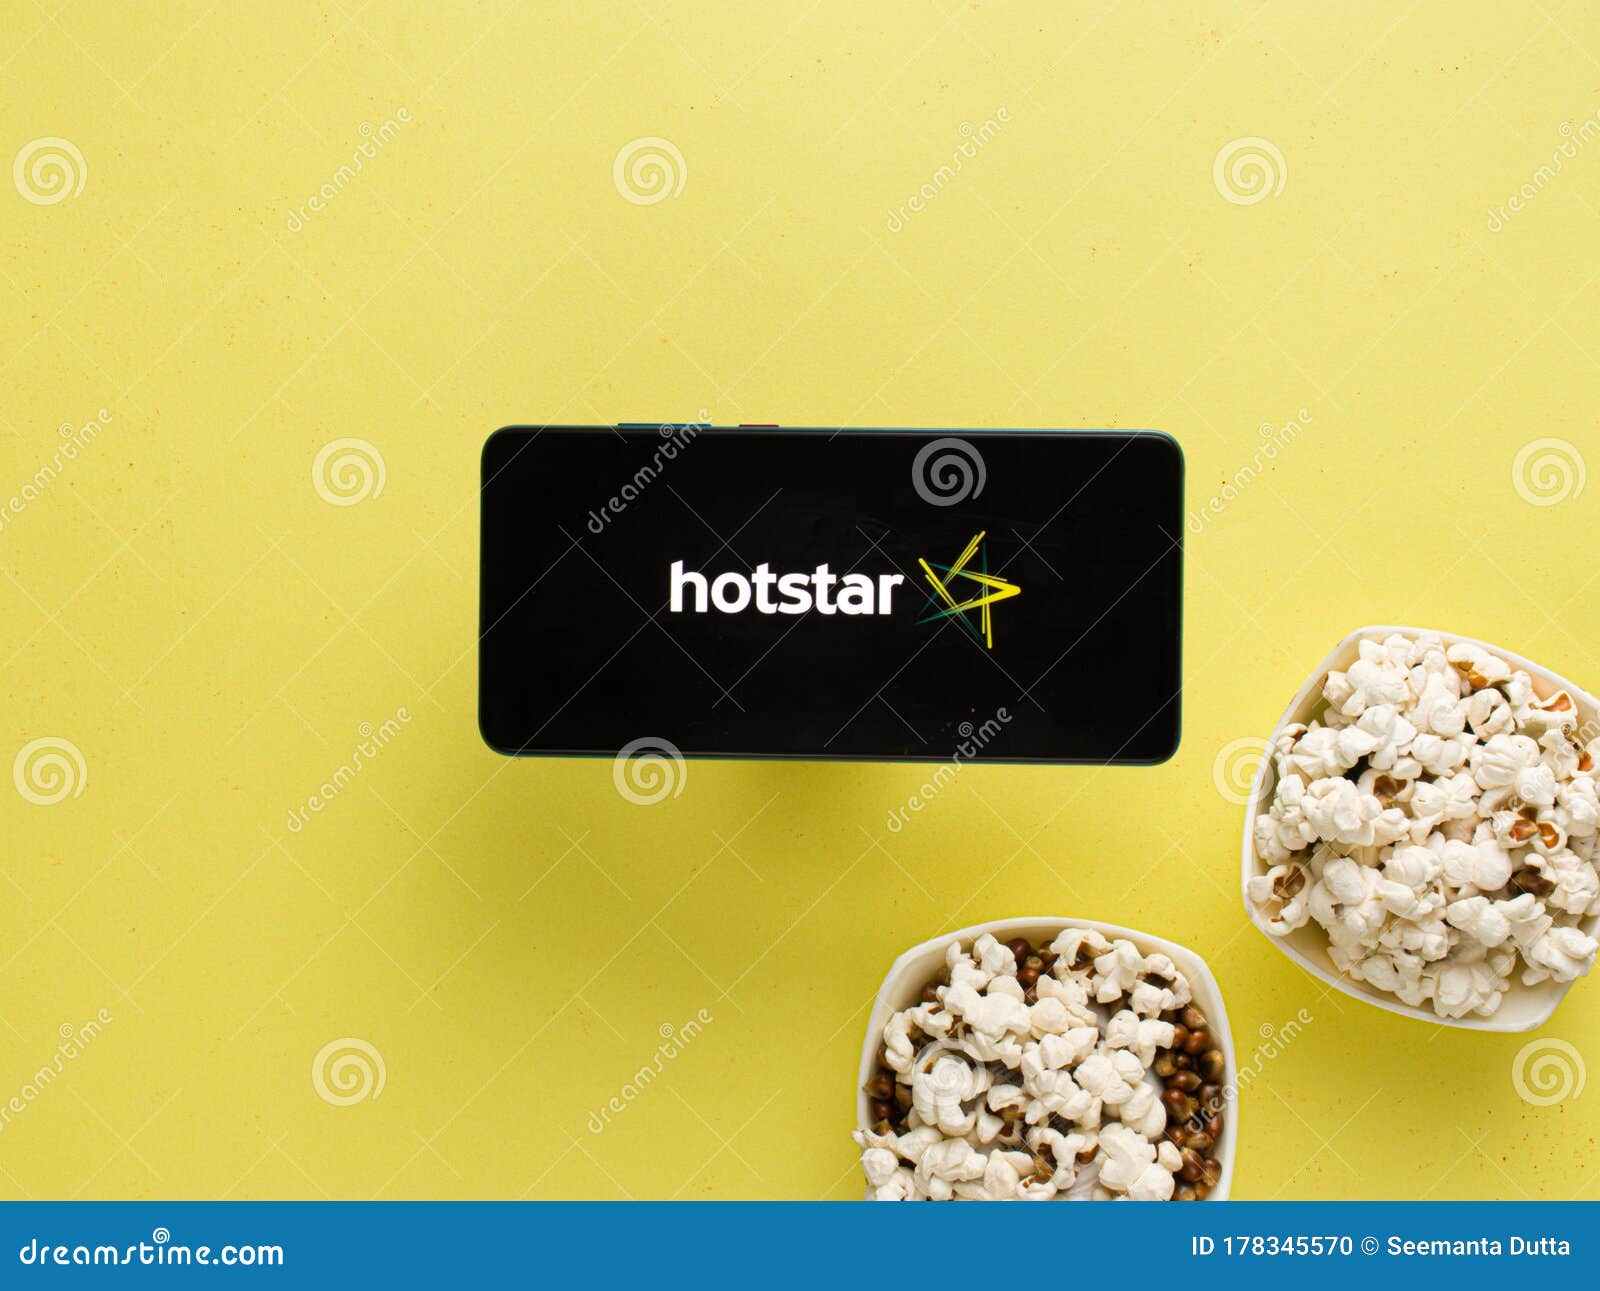 Hotstar Stock Photos